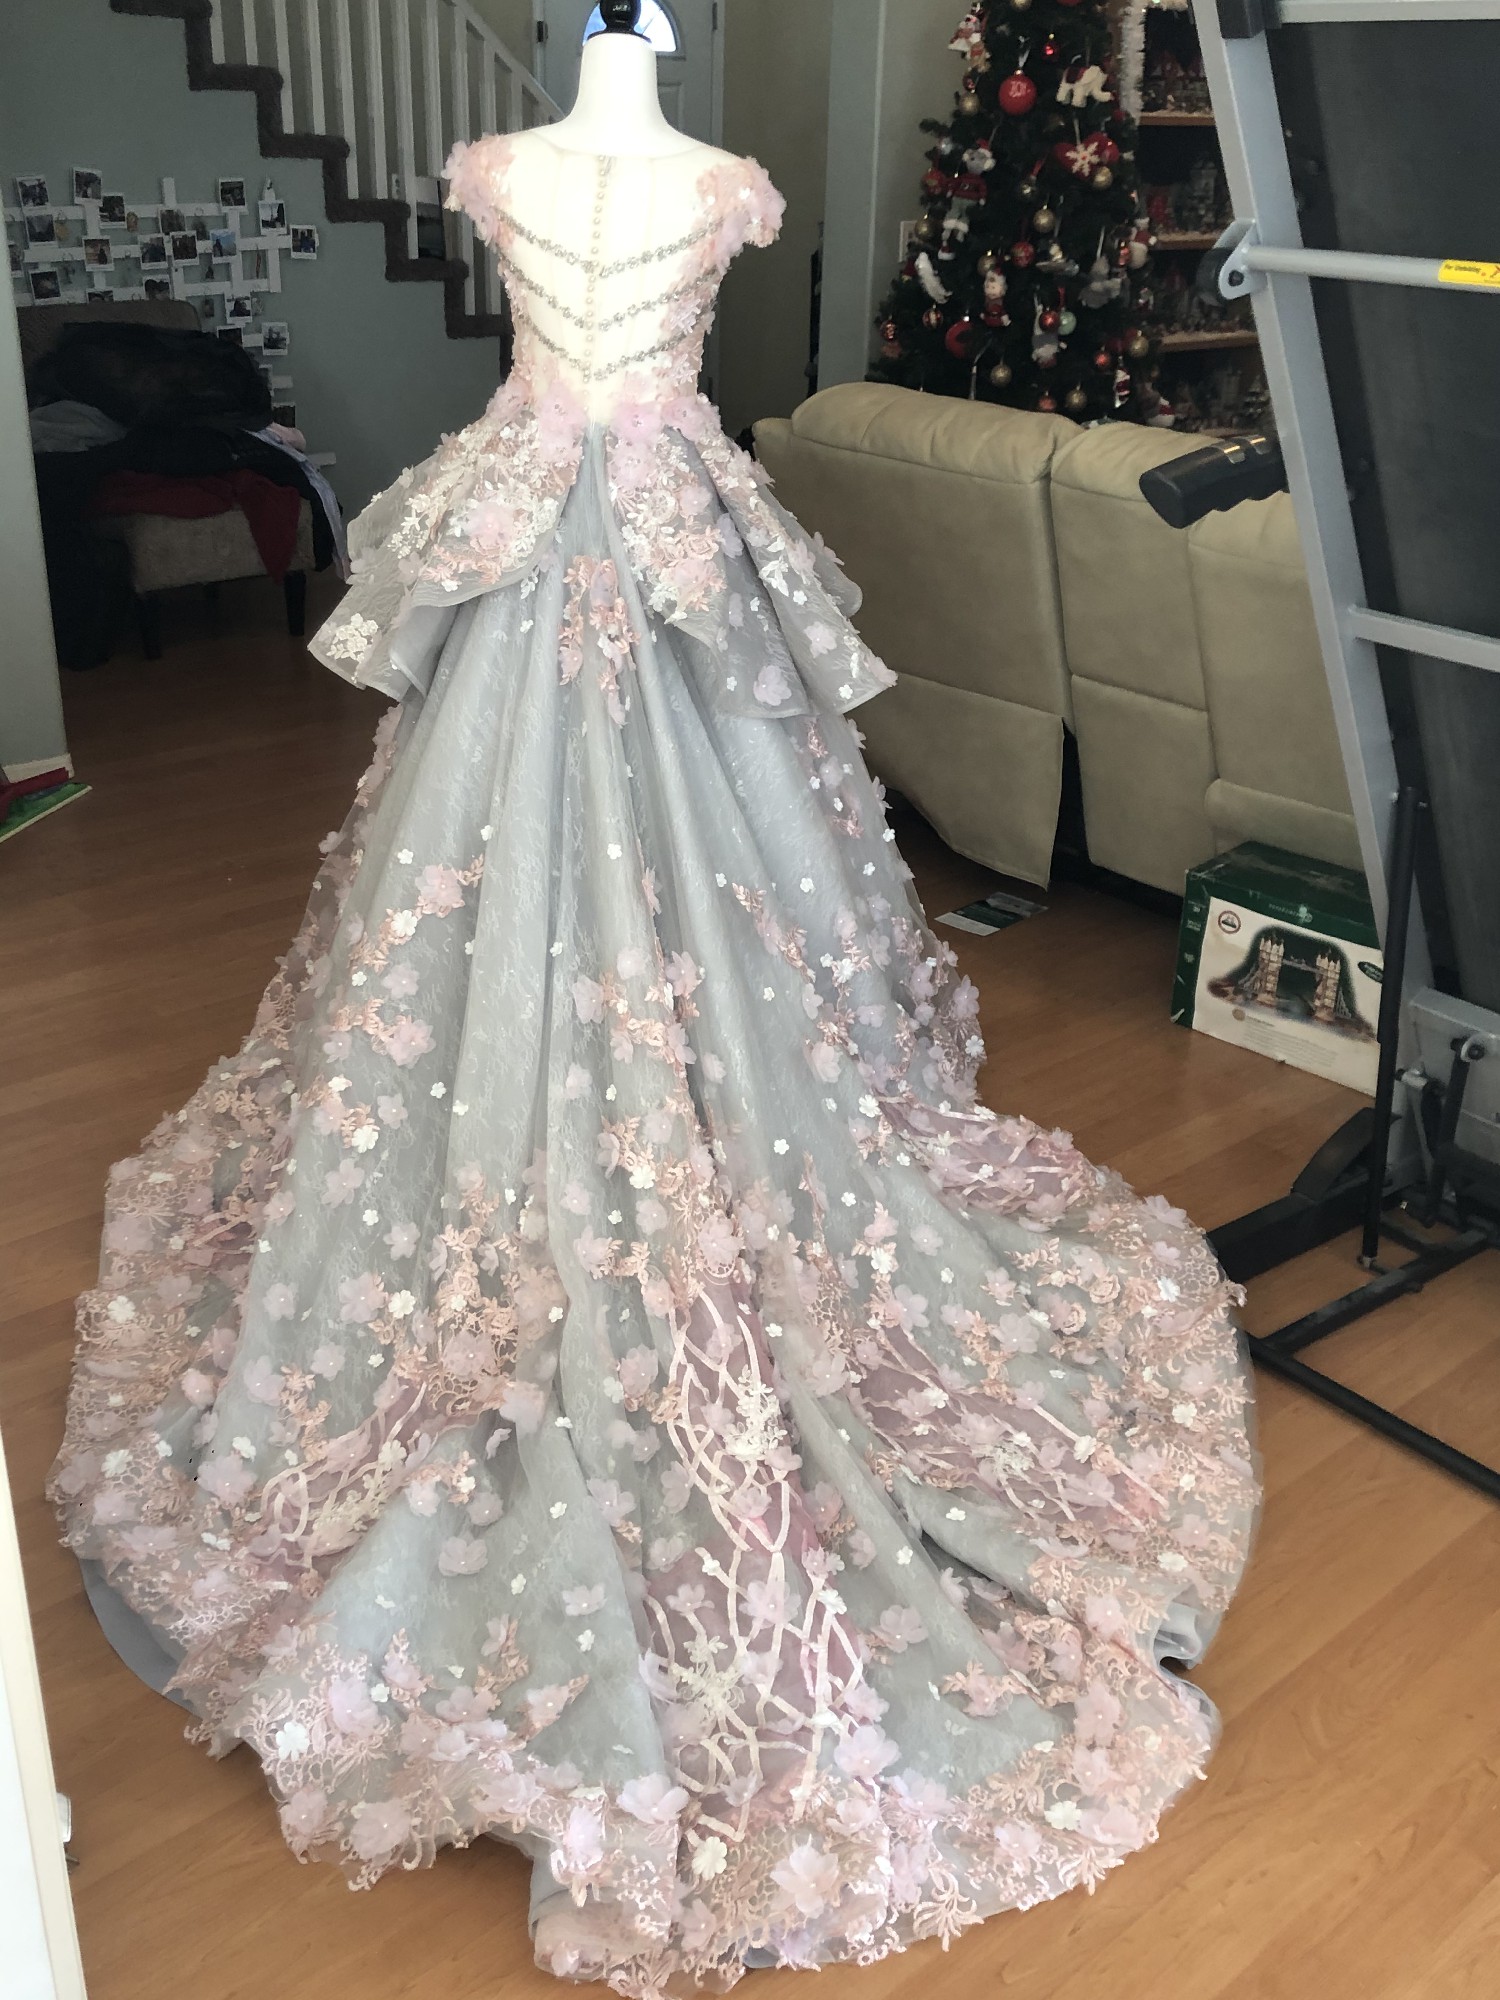 Custom Gown New Wedding Dress Save 43 Stillwhite